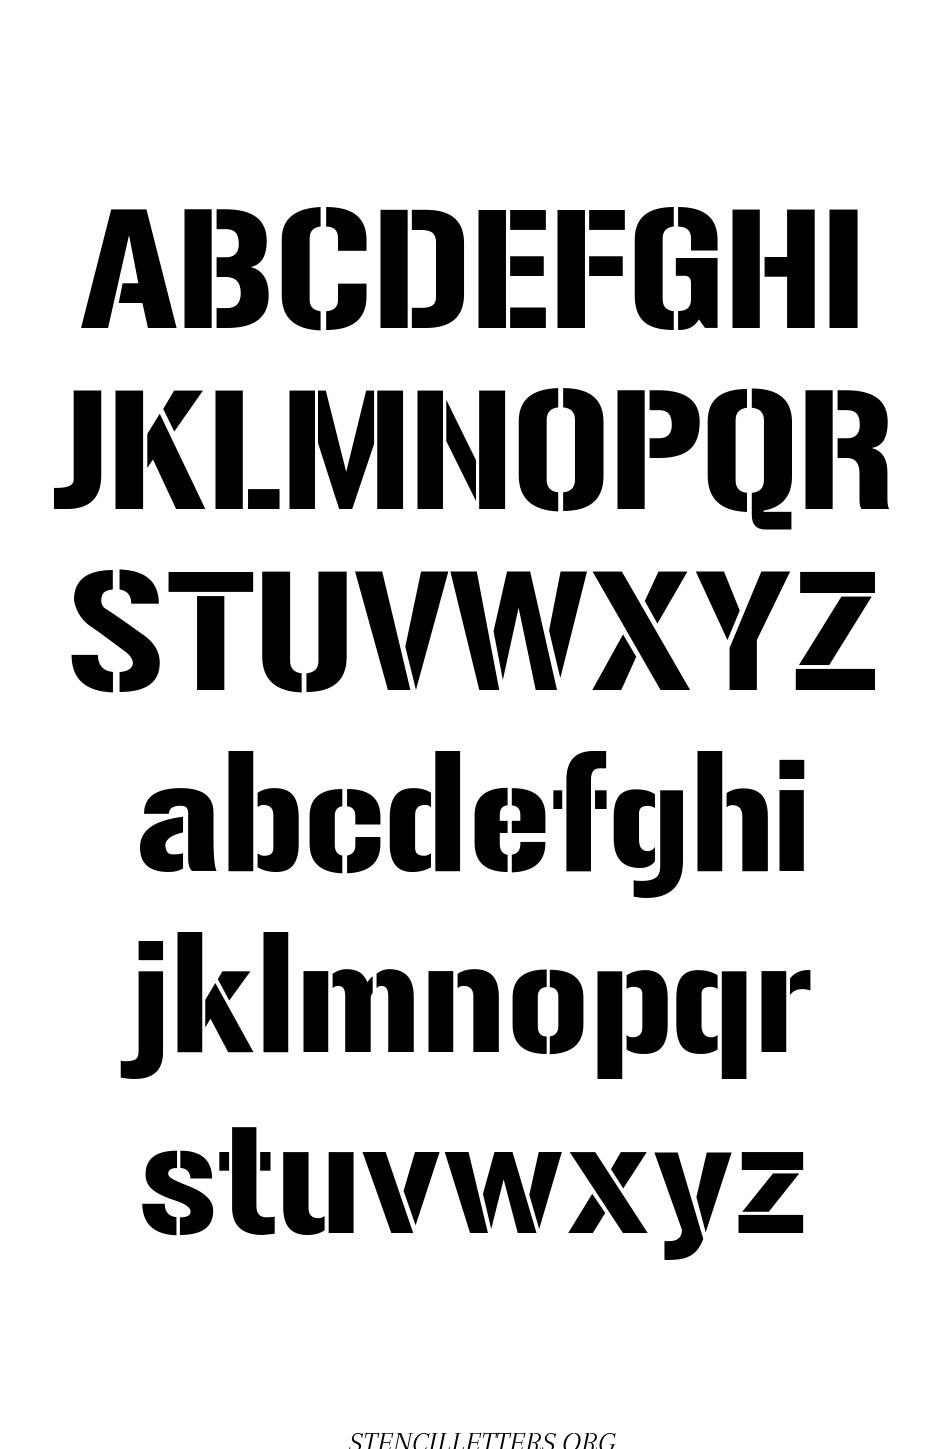 Premium PDF Printable Letter Stencils Stencil Letters Org